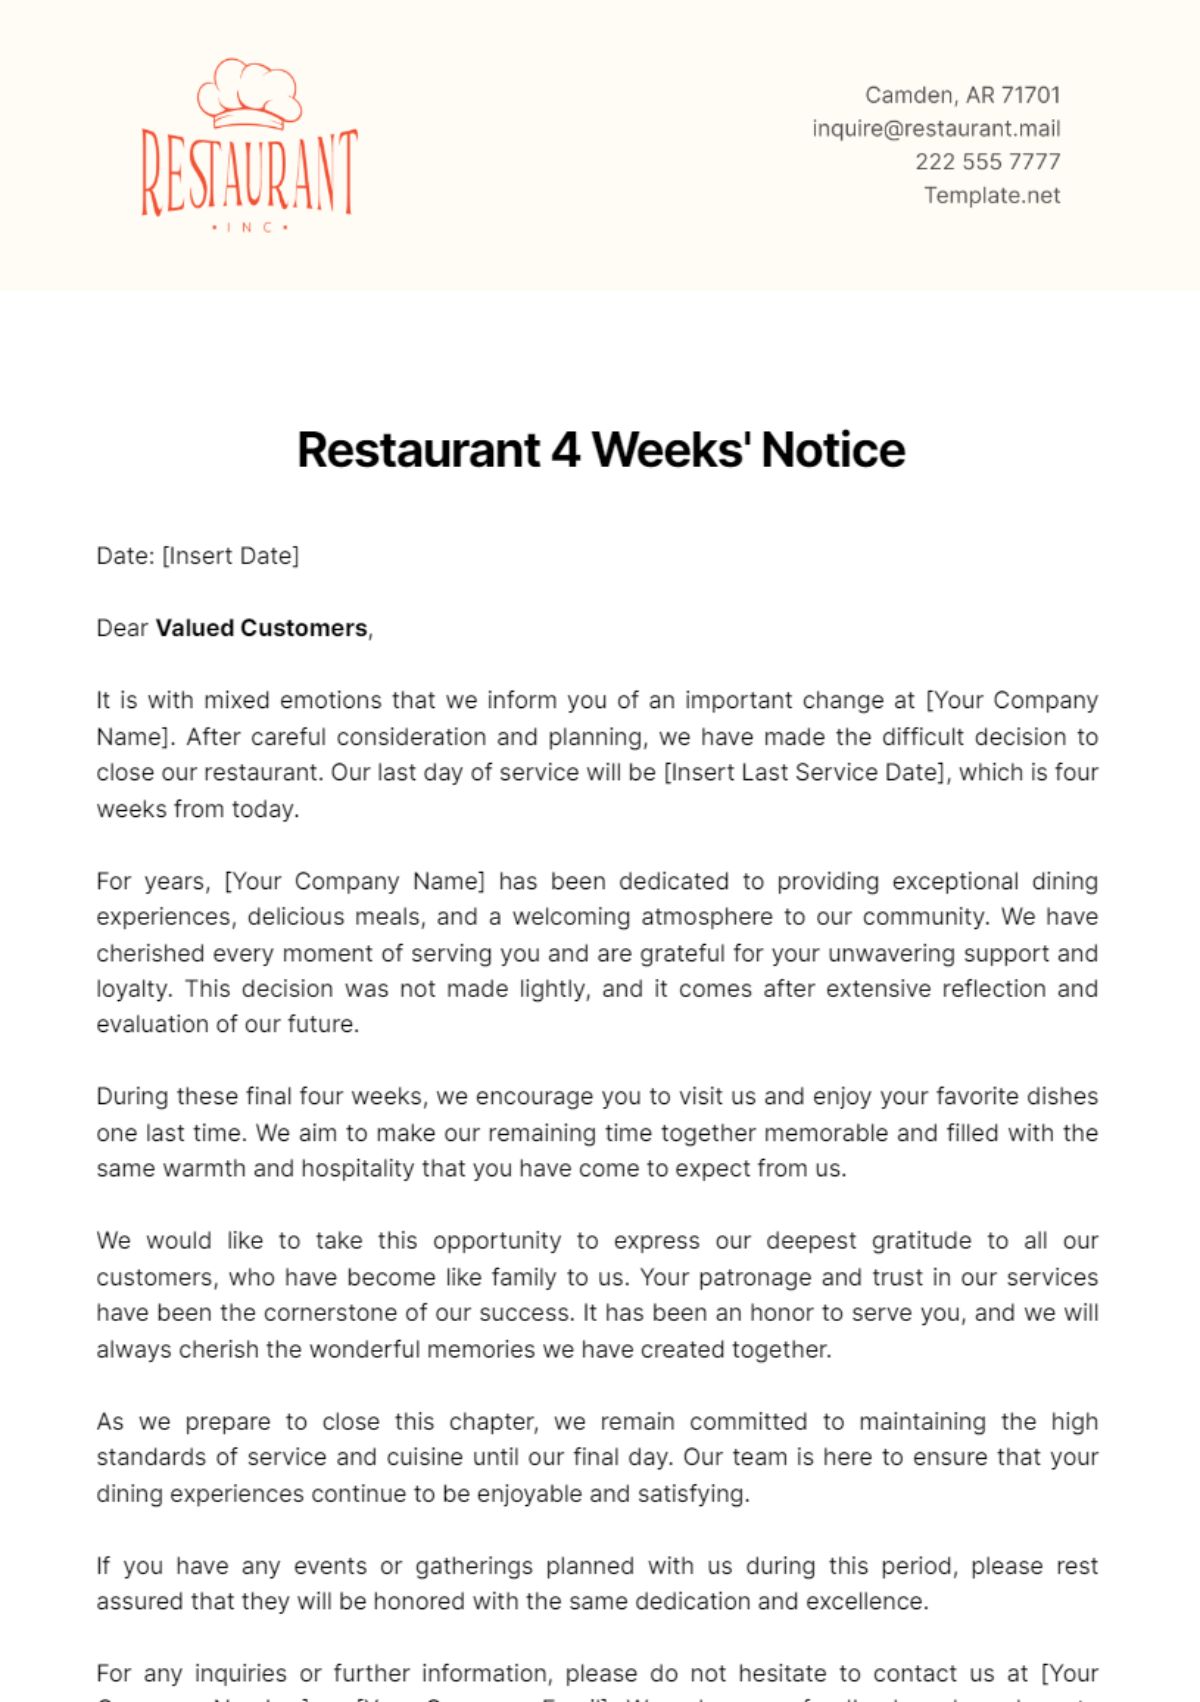 Restaurant 4 Weeks' Notice Template